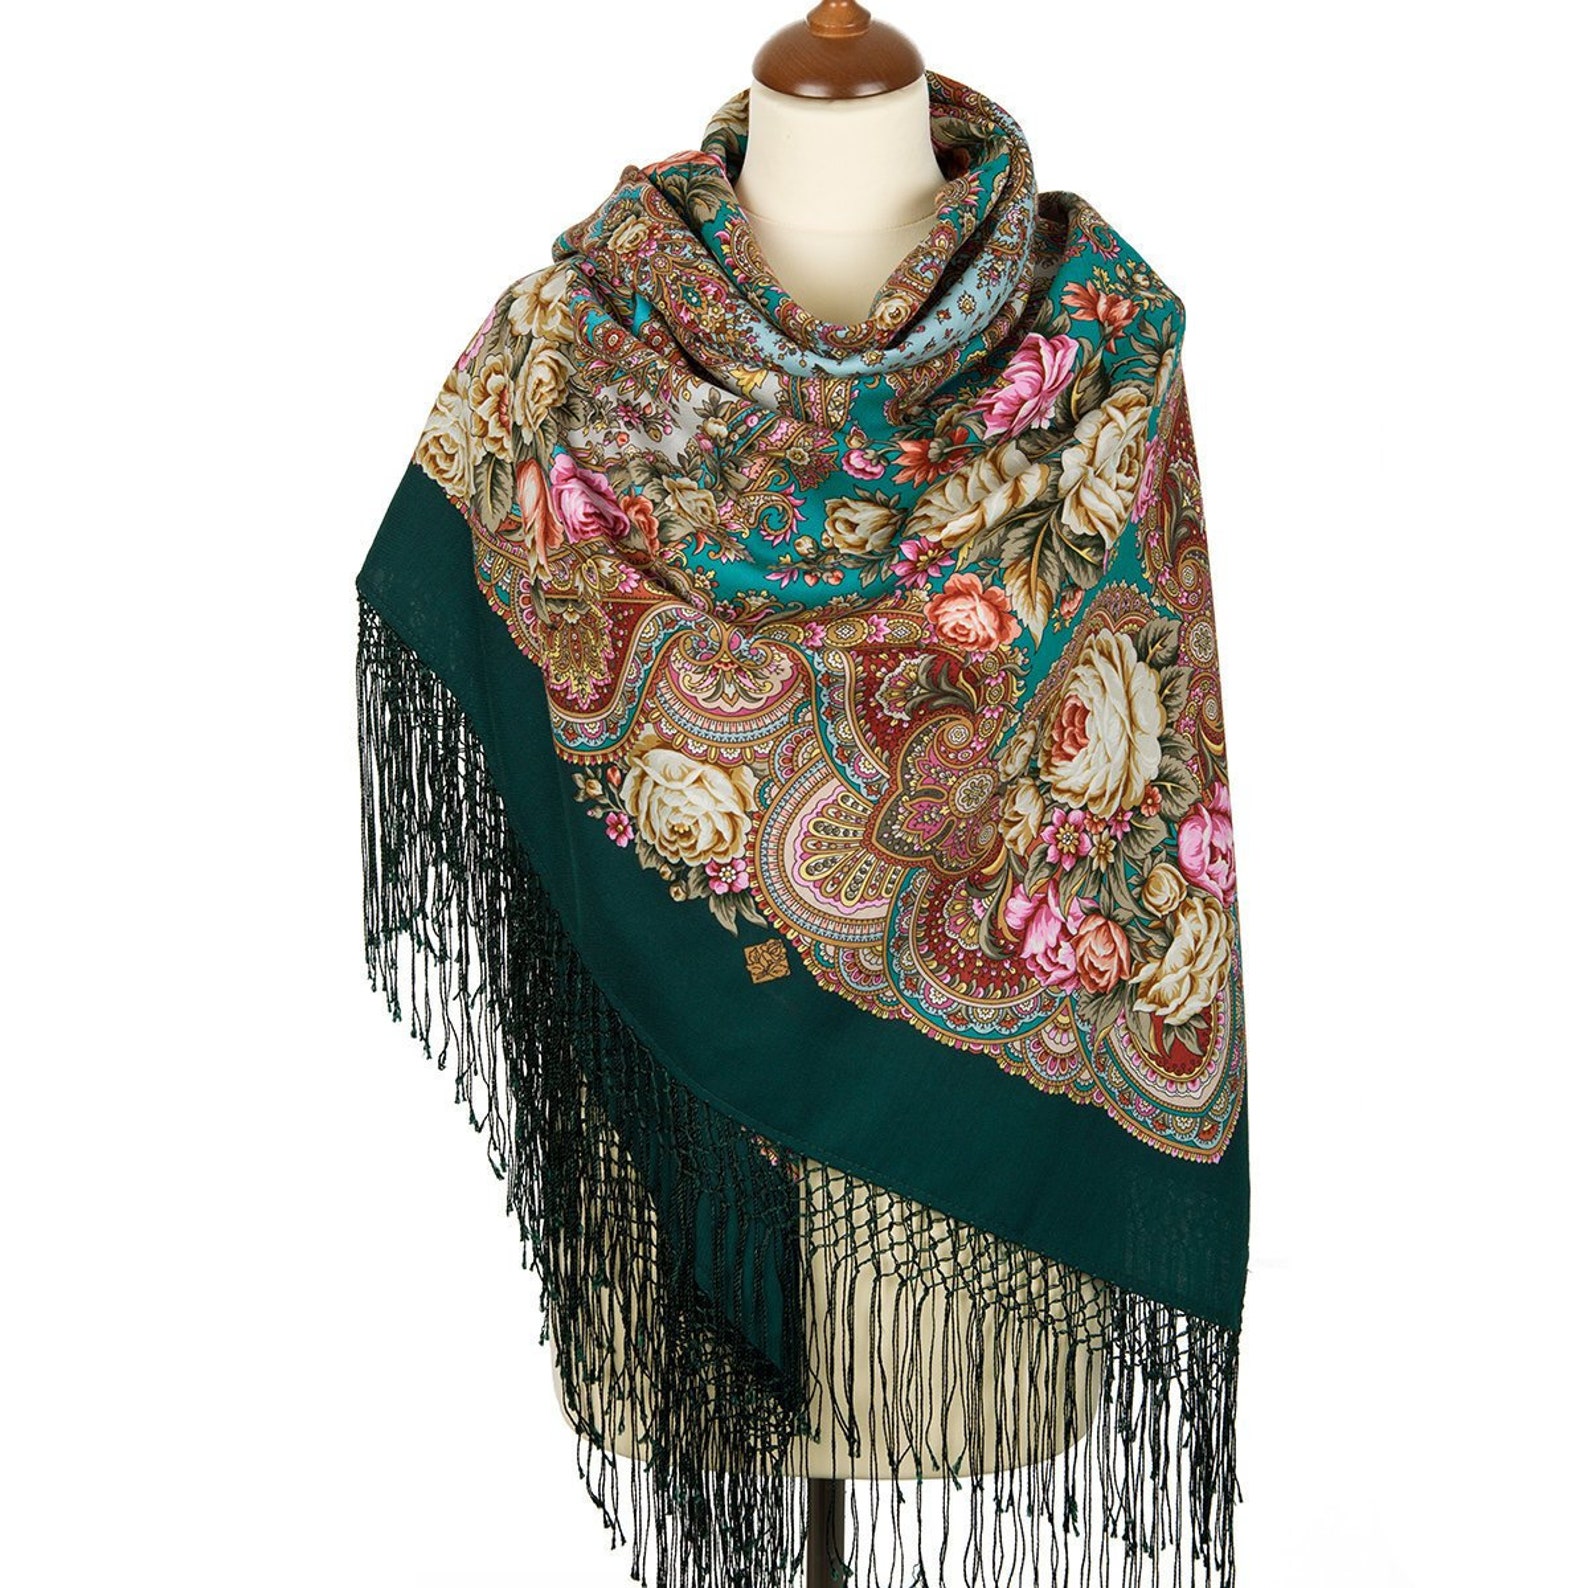 Original Pavlovo Posad russian shawl 100% wool silk fringe | Etsy